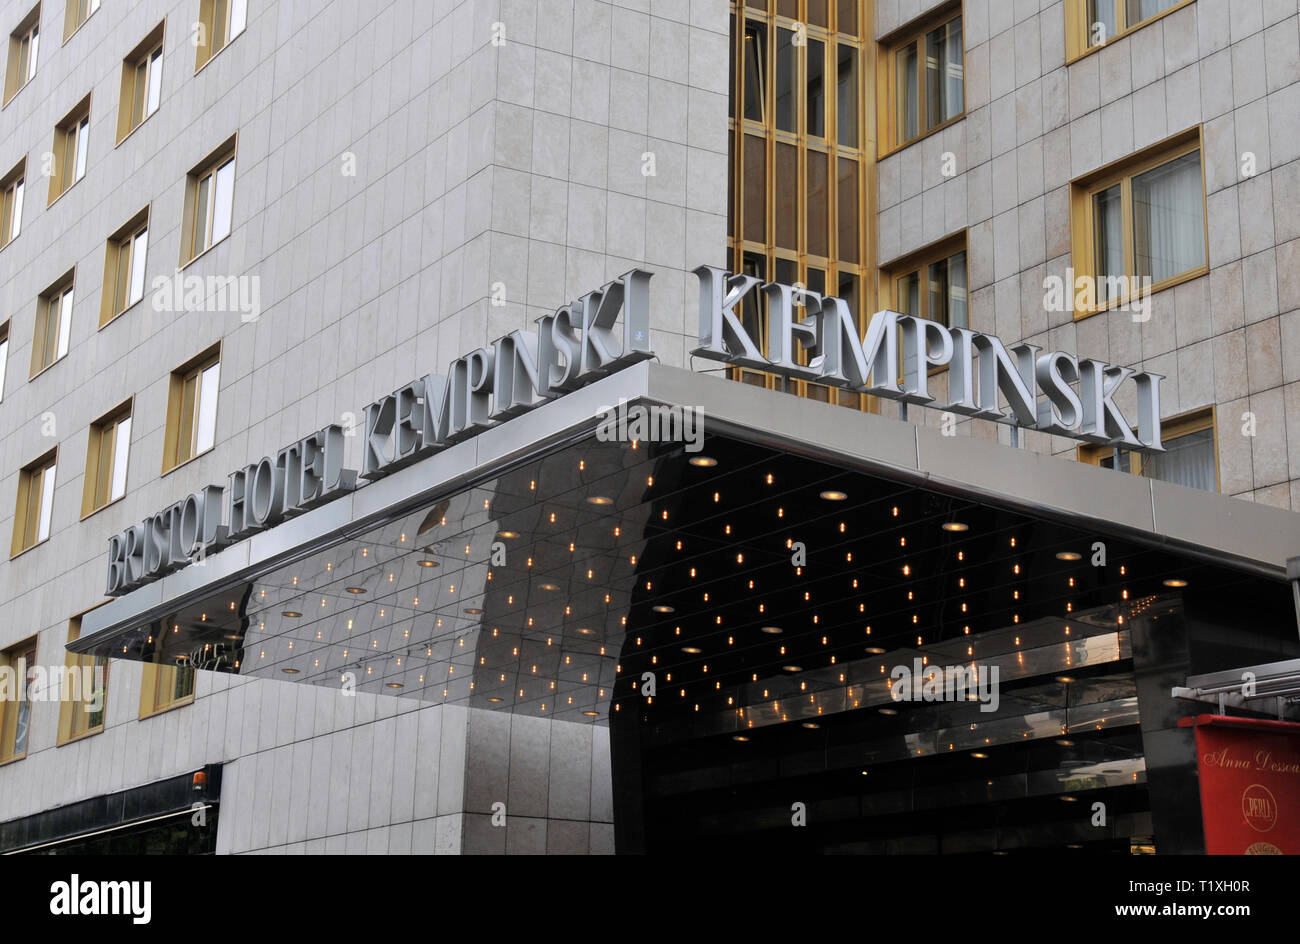 Bristol Hotel Kempinski, Berlin, Germany Stock Photo